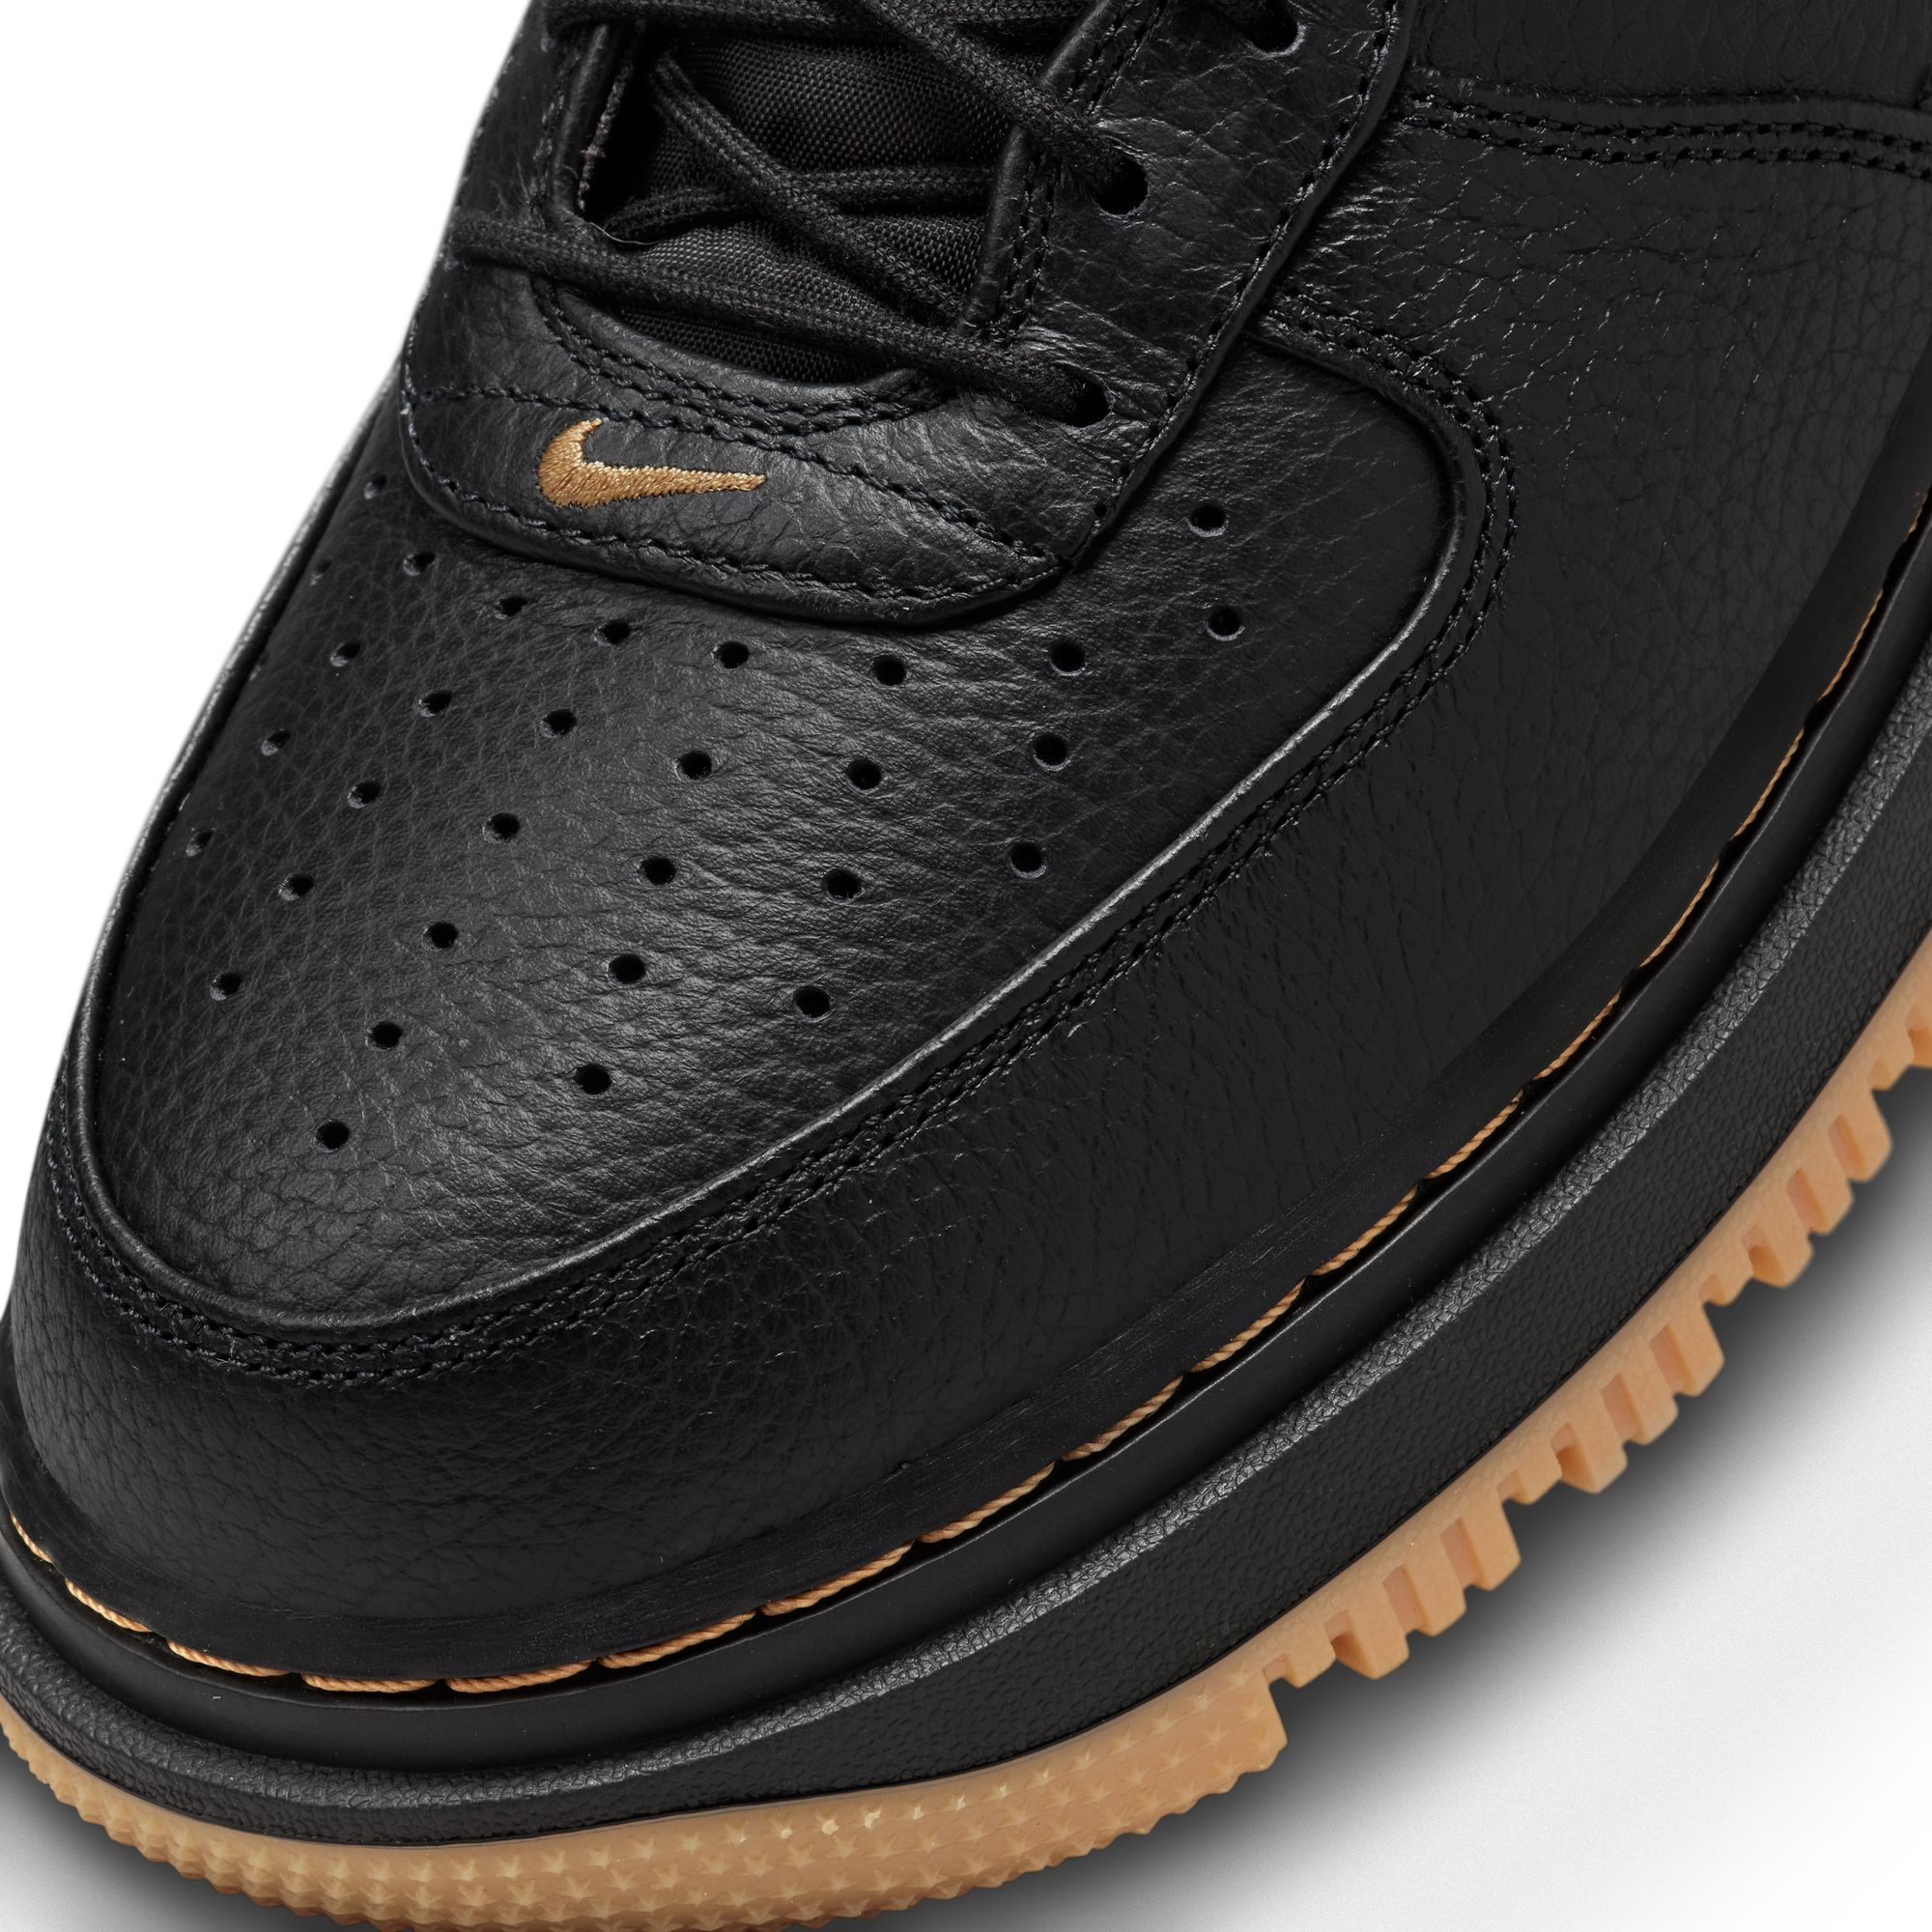 Nike Air Force 1 Luxe Black / Buck Tan / Gum Yellow Low Top Sneakers -  Sneak in Peace